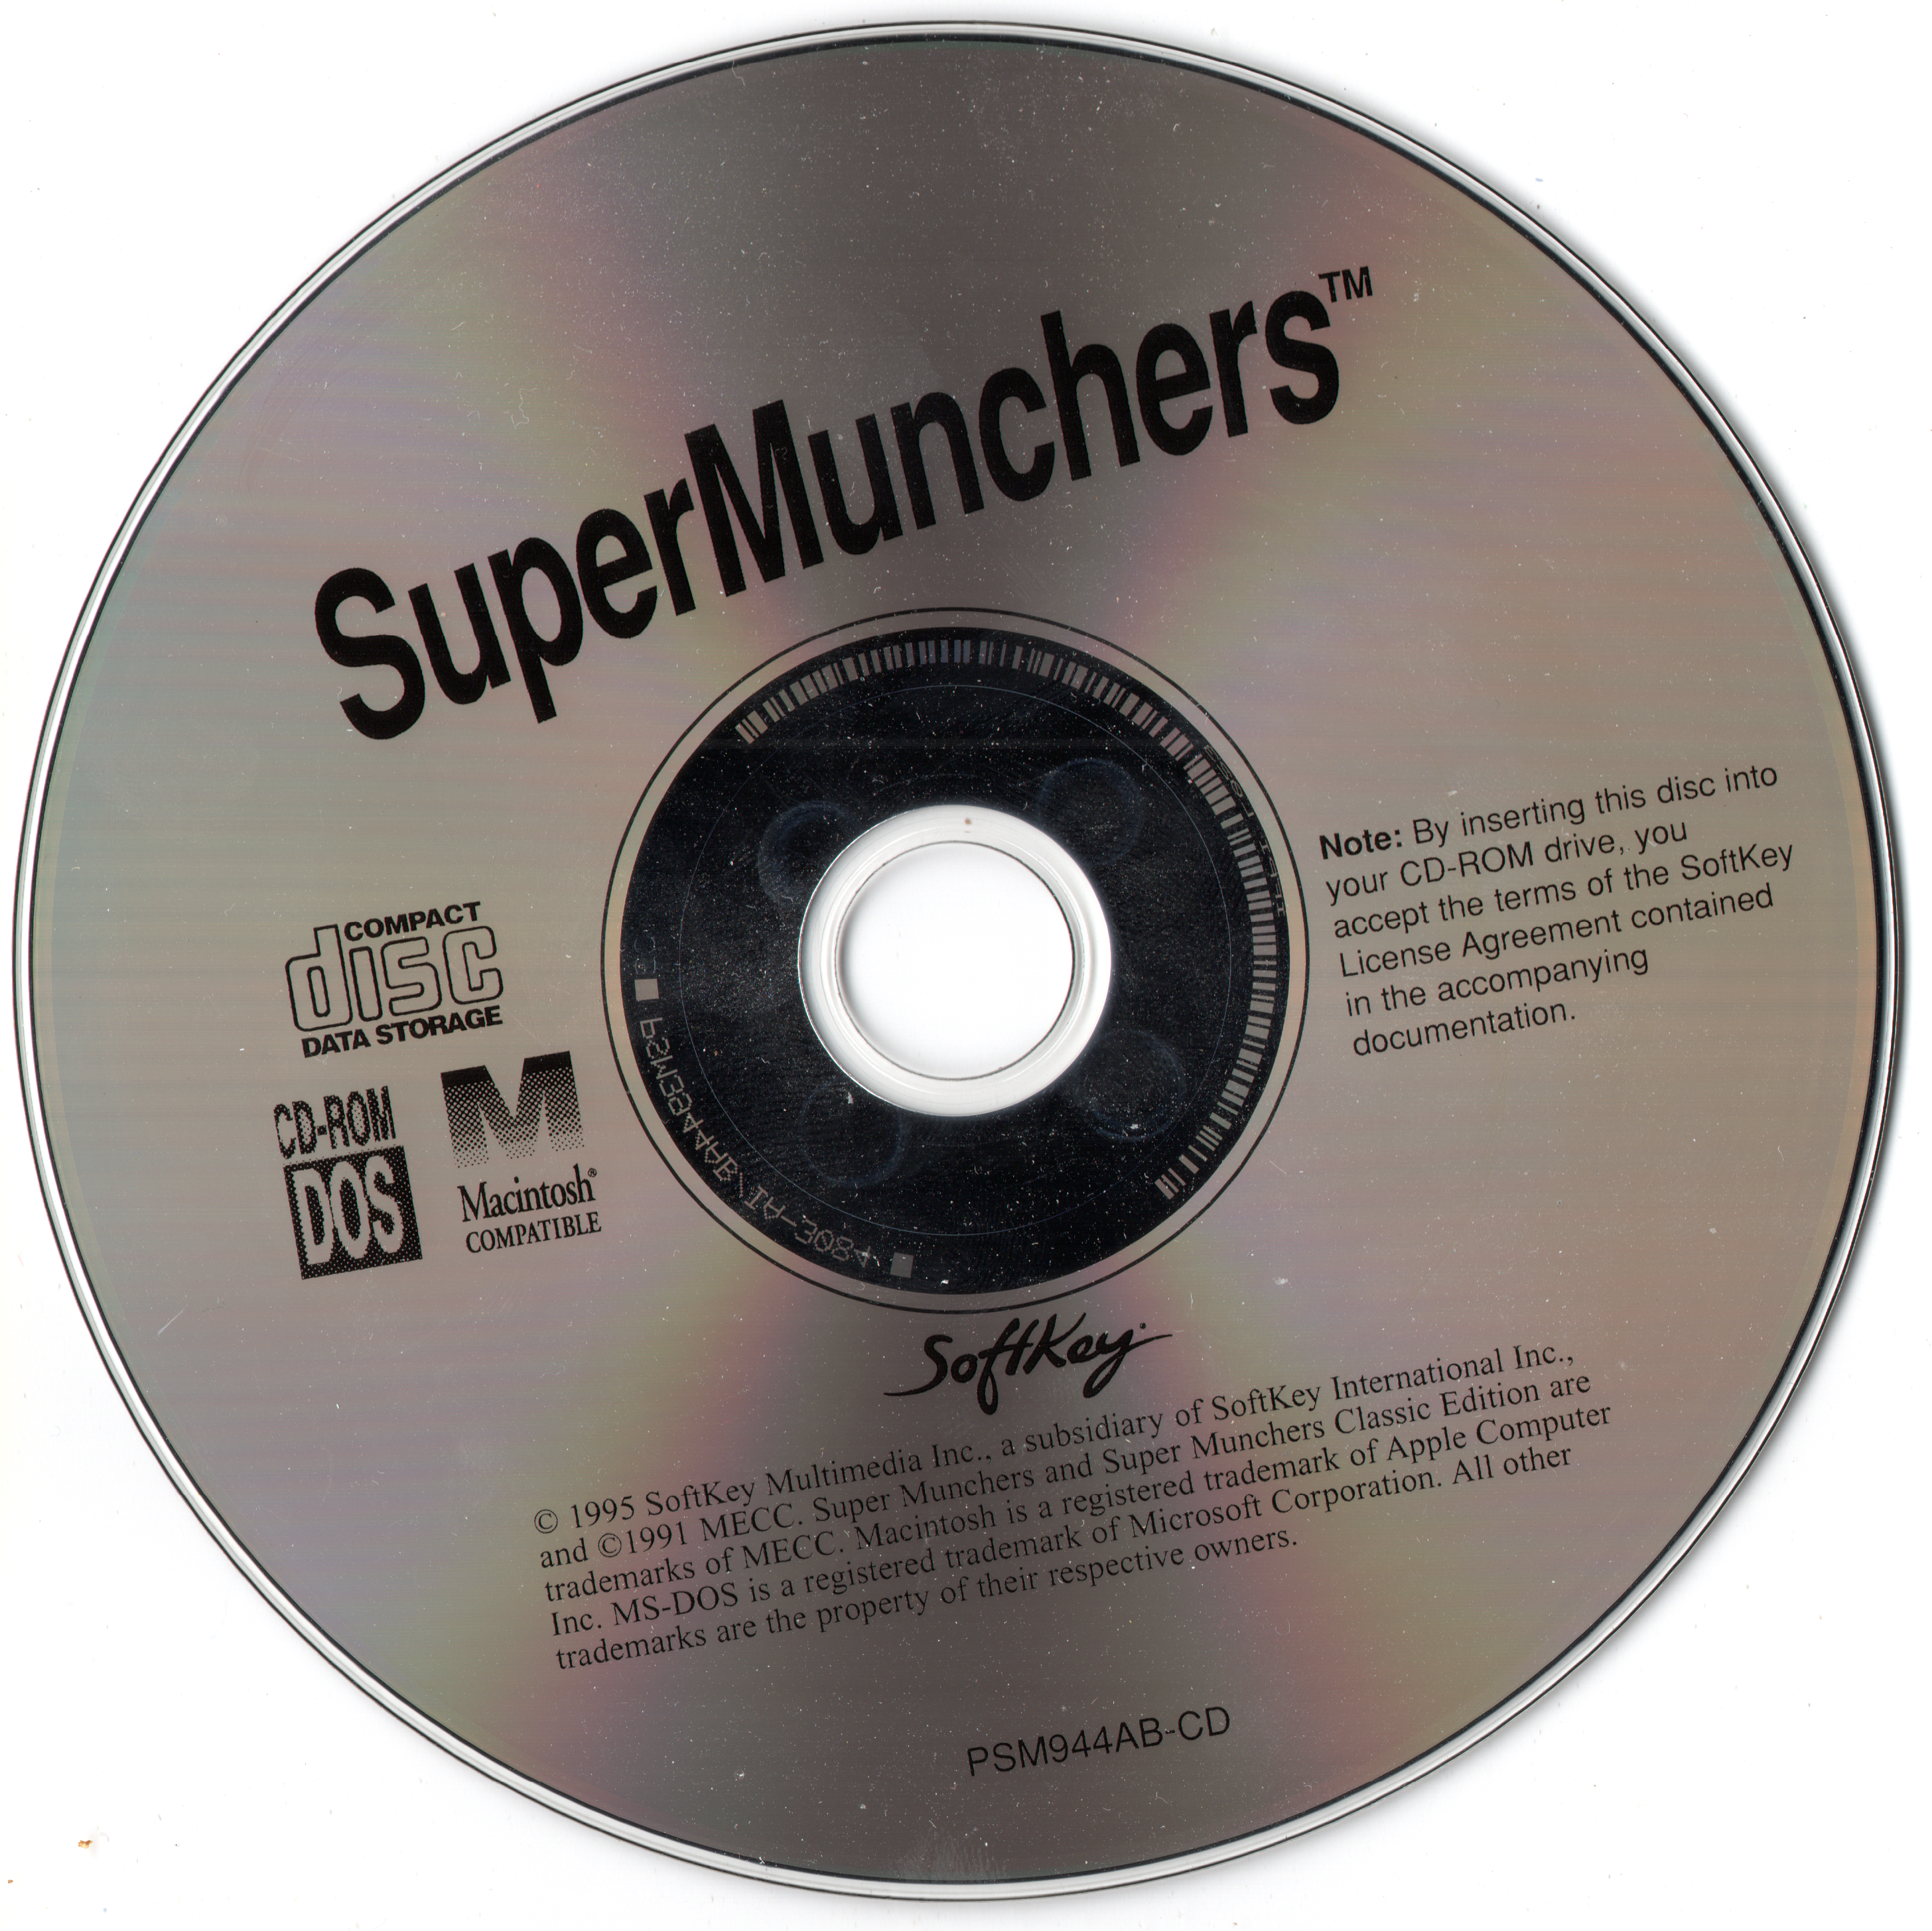 Super munchers mac download windows 10